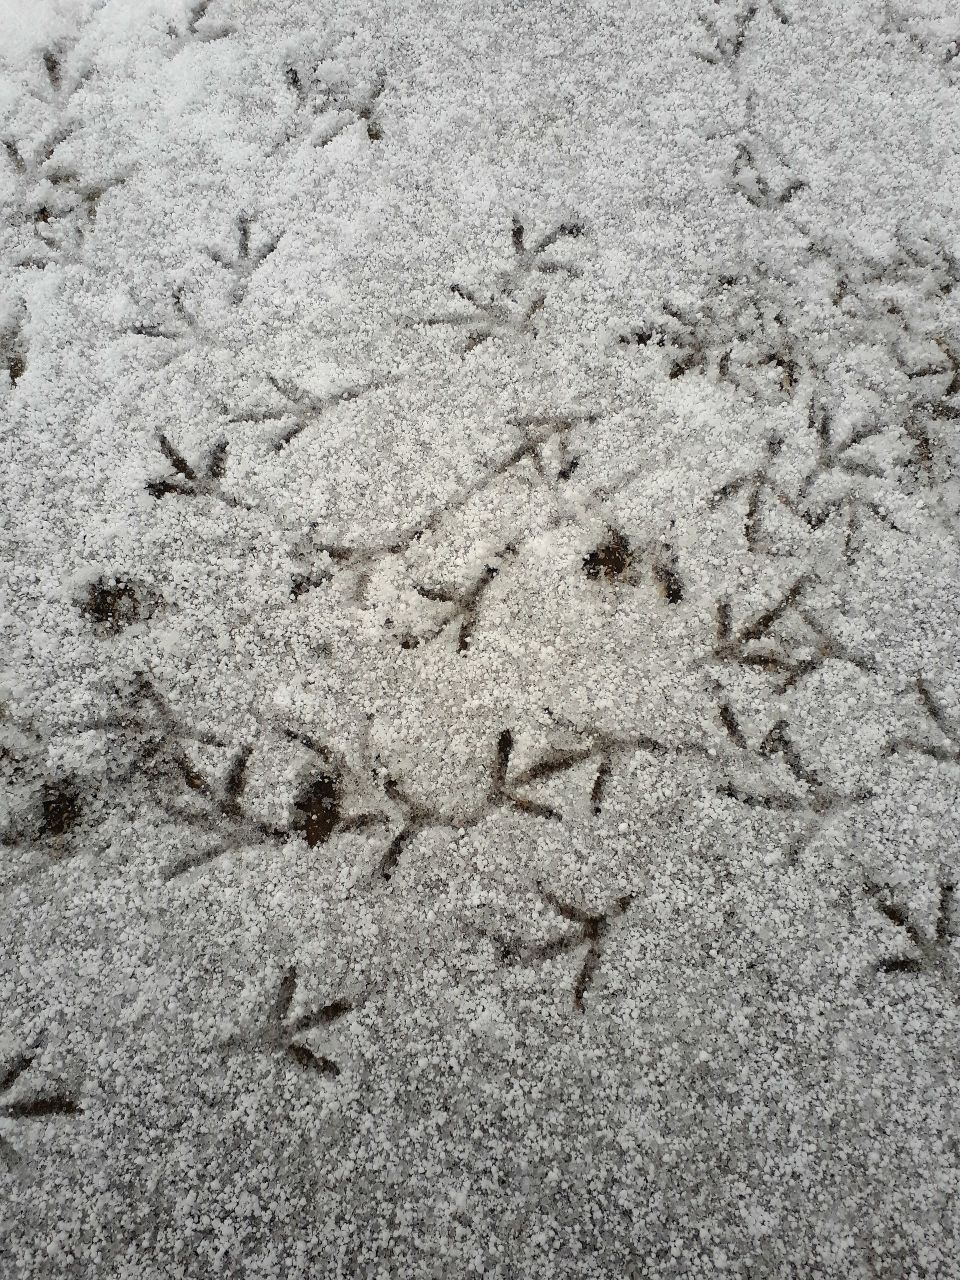 fingerprint of bird in snow